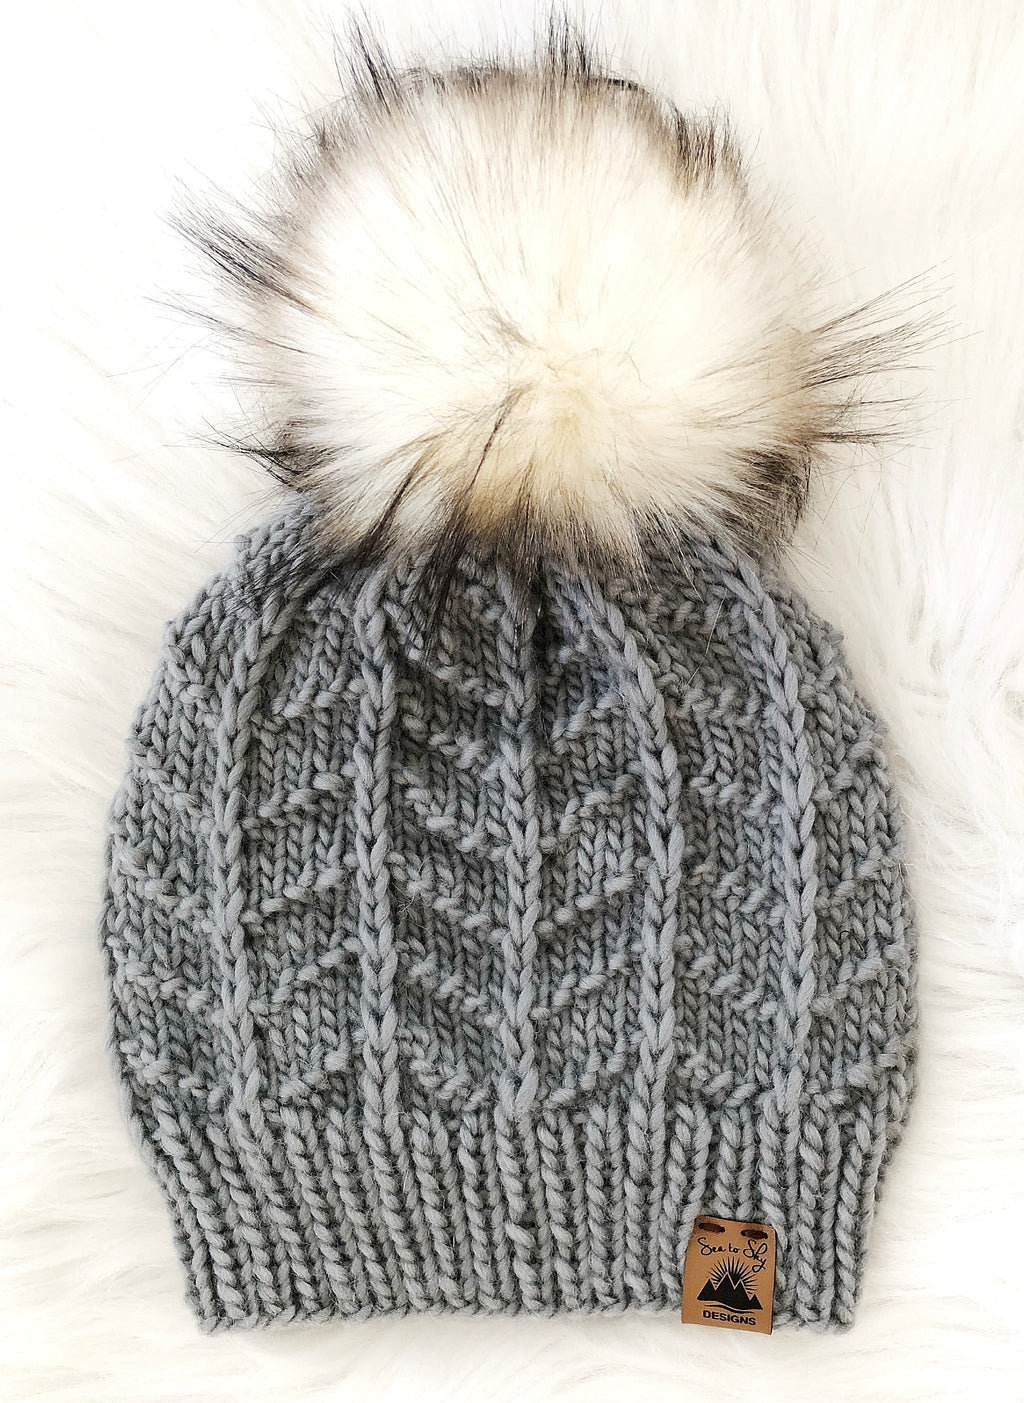 Ready to Ship - Adult Size 100% Peruvian Wool Lightweight Knit Hat - Grey